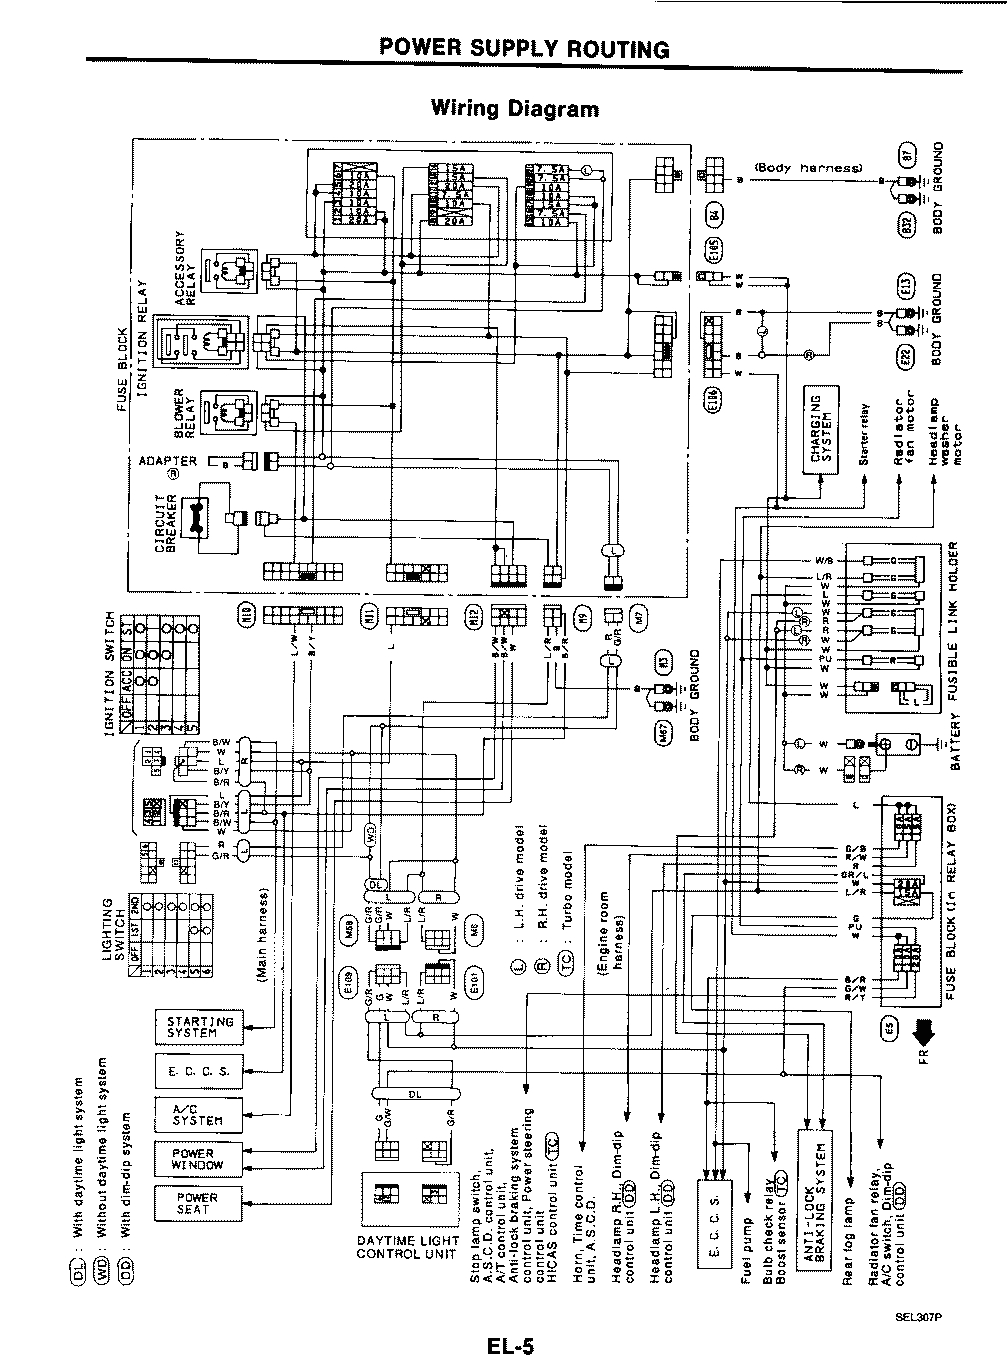 2002 Nissan Frontier Trailer Wiring Diagram A Diagram Baseda Qg18 Nissan Wiring Diagrams Completed